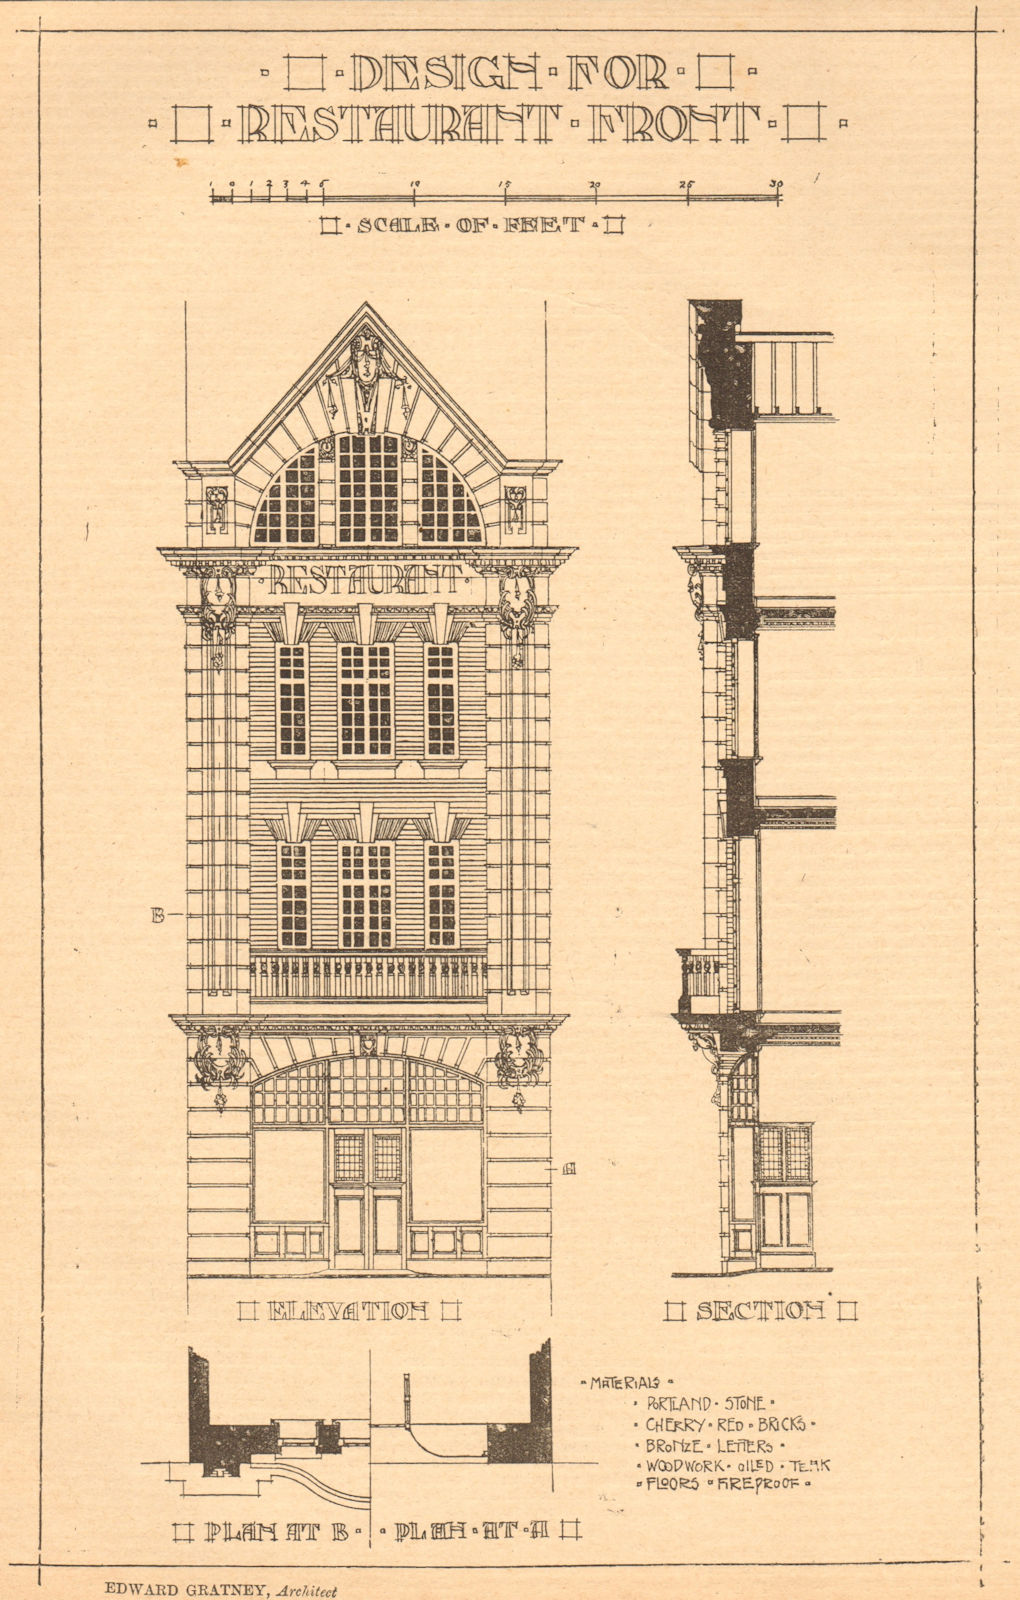 Restaurant front design, Edward Gratney, Architect. Elevation plan section 1903